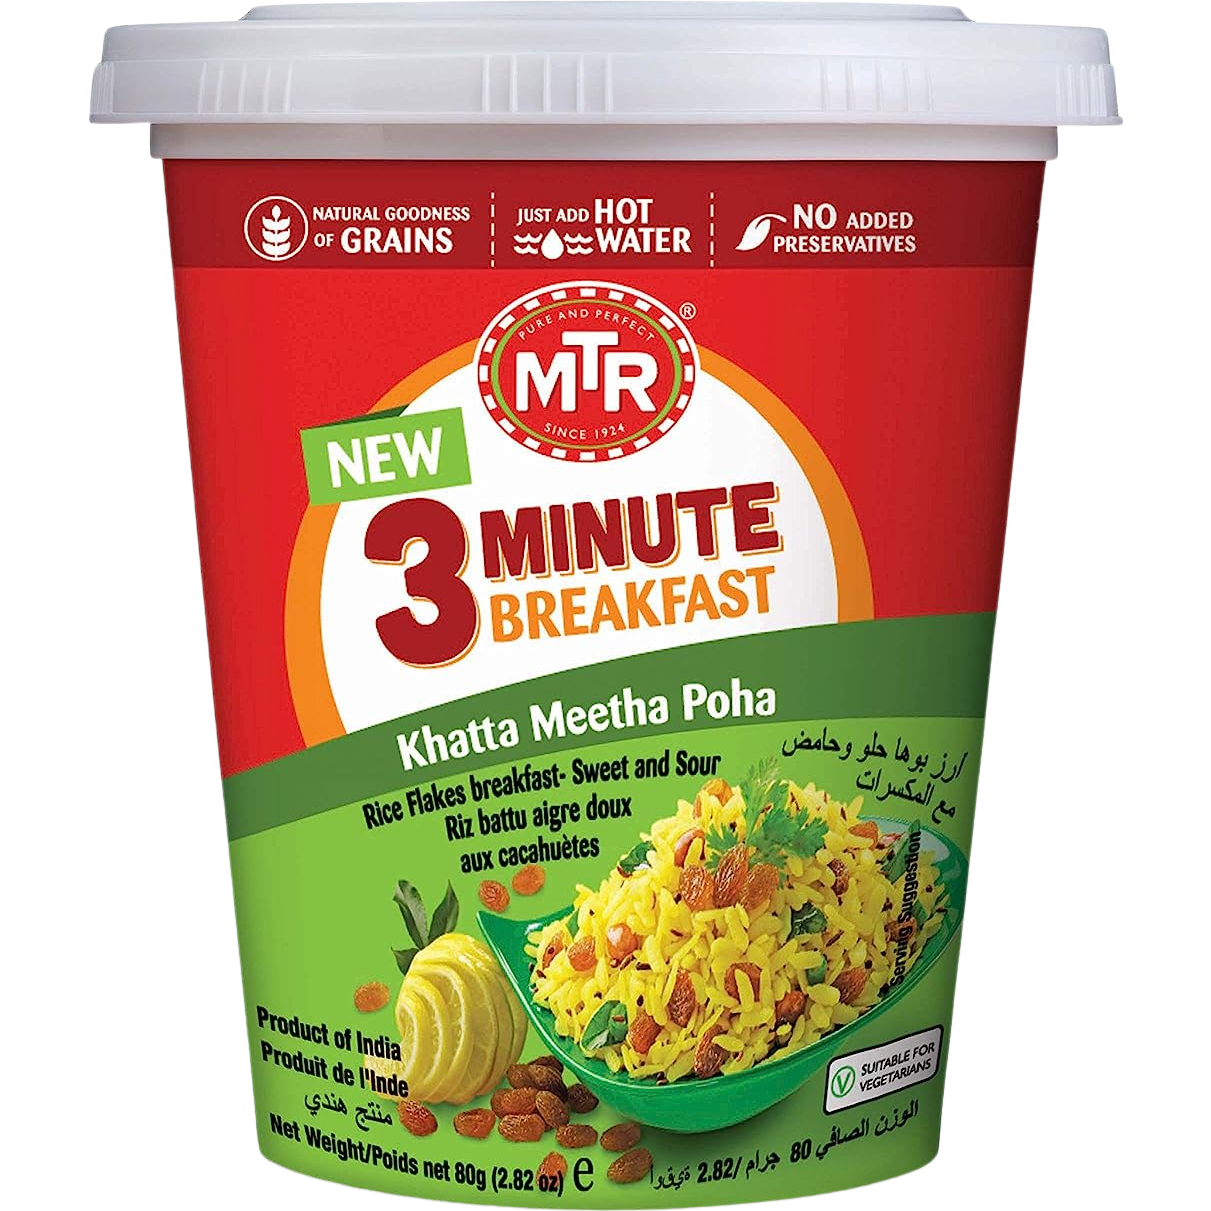 Case of 24 - Mtr 3 Minute Breakfast Cup Khatta Meetha Poha - 80 Gm (2.8 Oz)